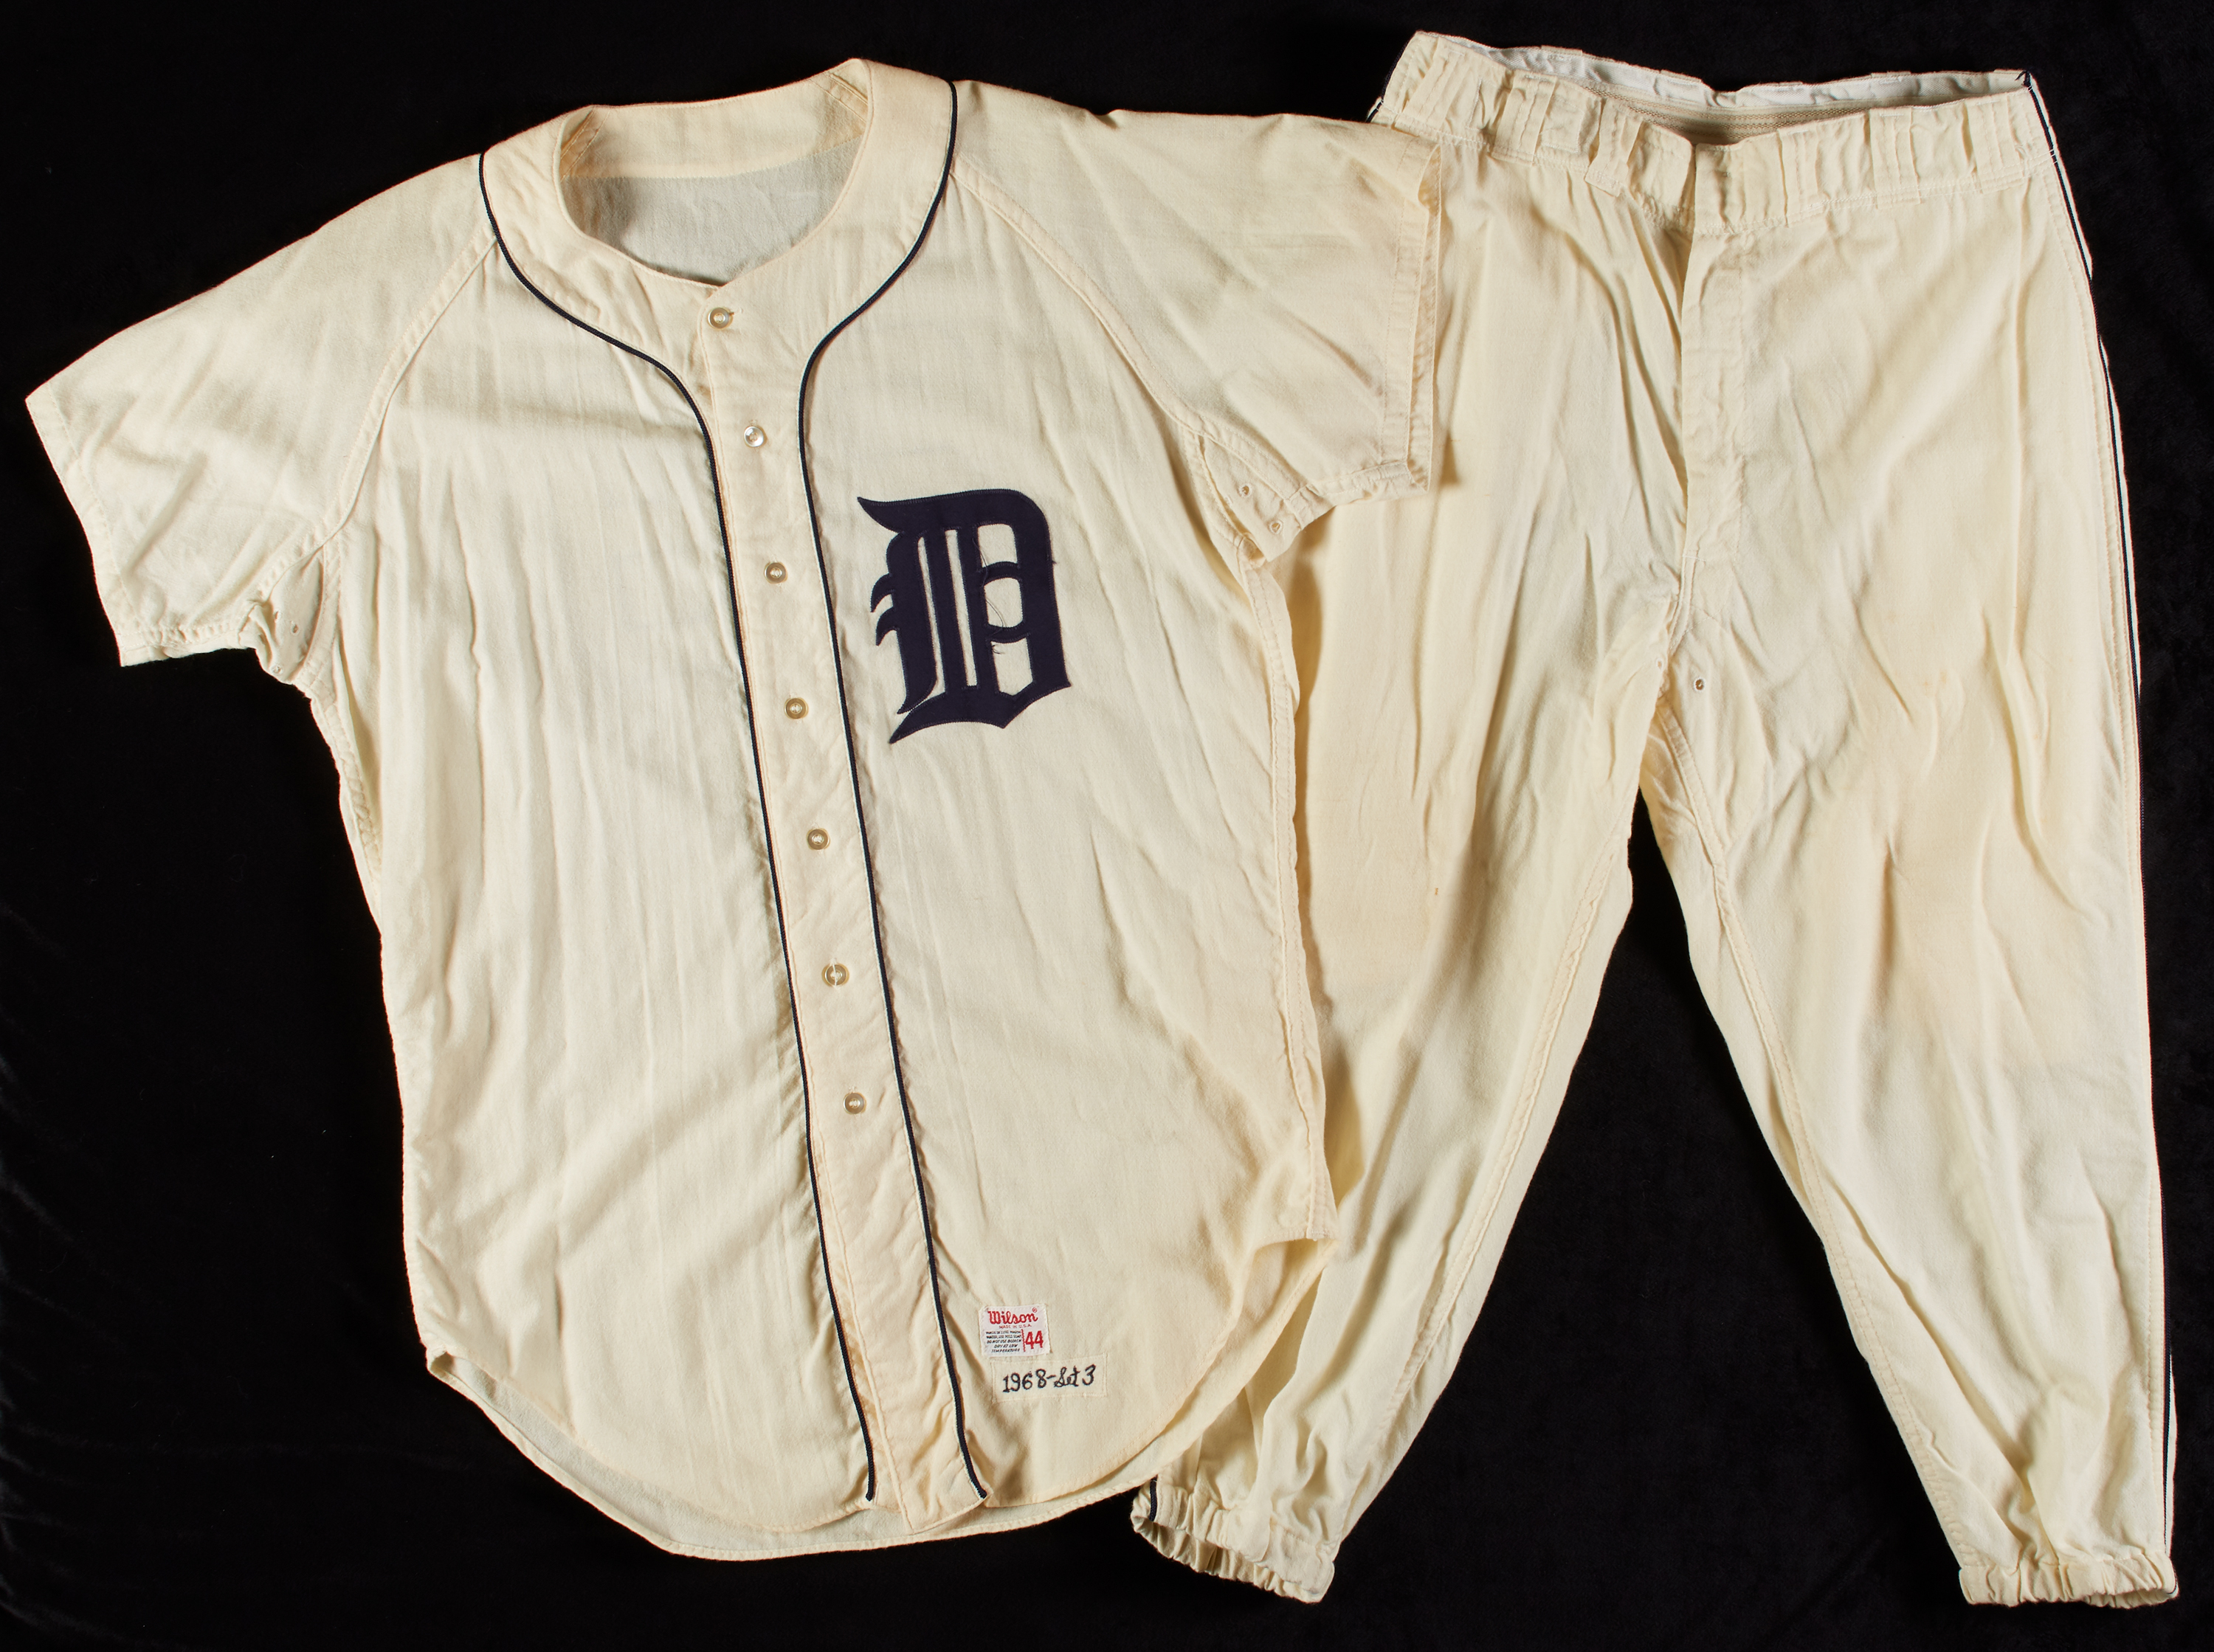 1968 detroit tigers uniform